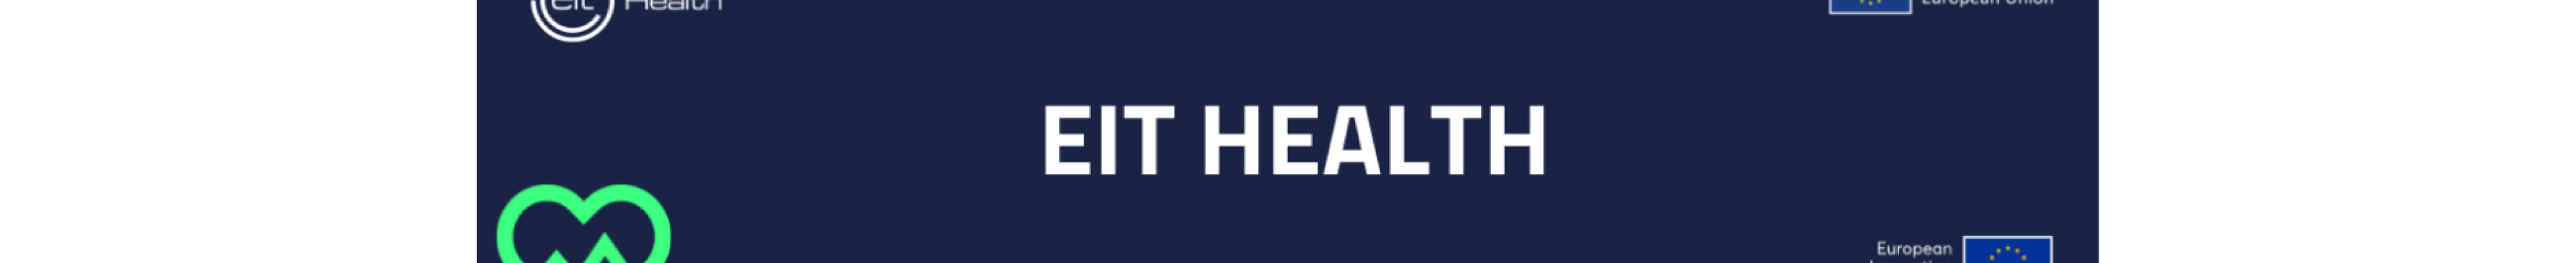 banner_eit-health.png